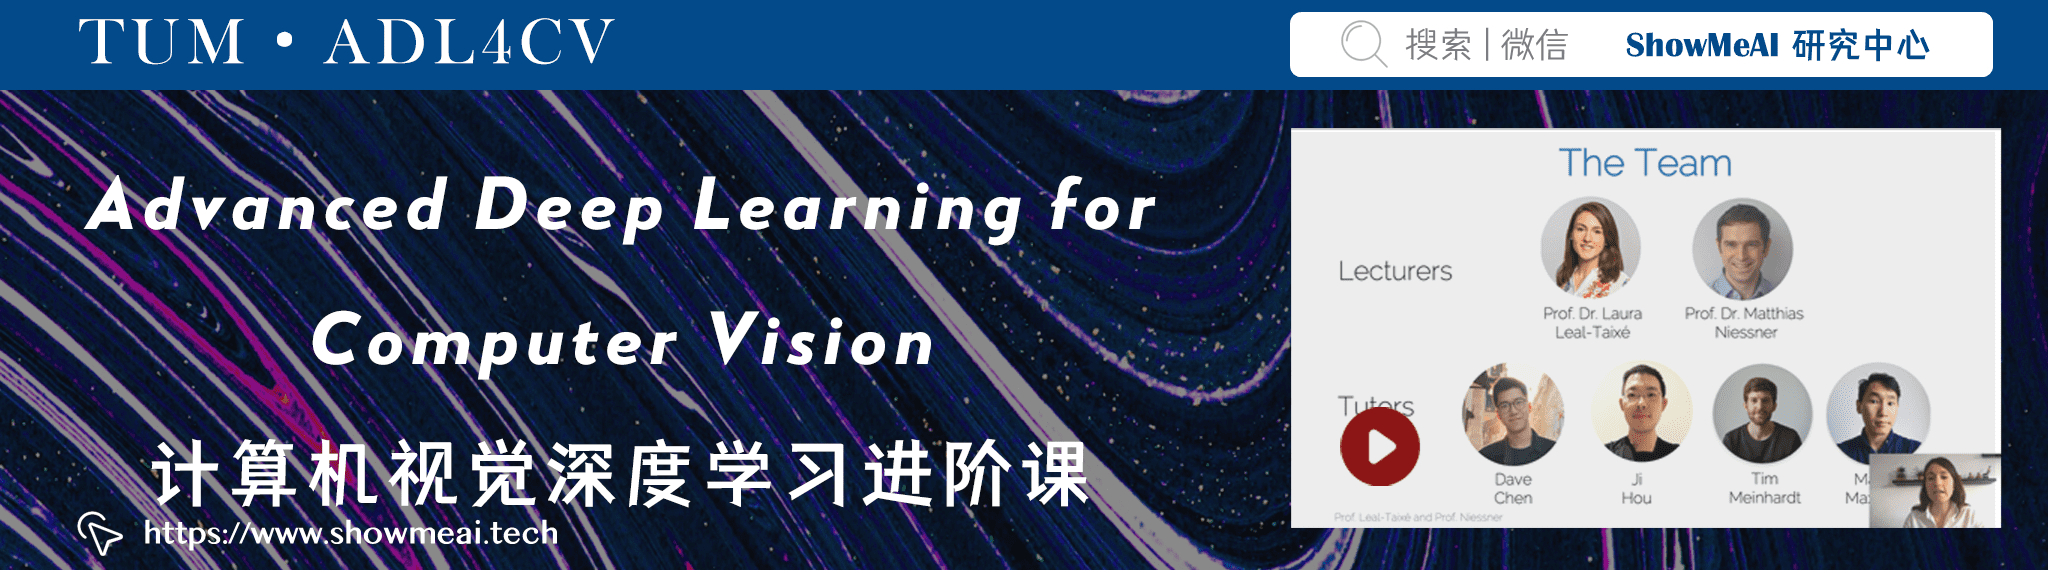 ADL4CV; Advanced Deep Learning for Computer Vision; 计算机视觉深度学习进阶课